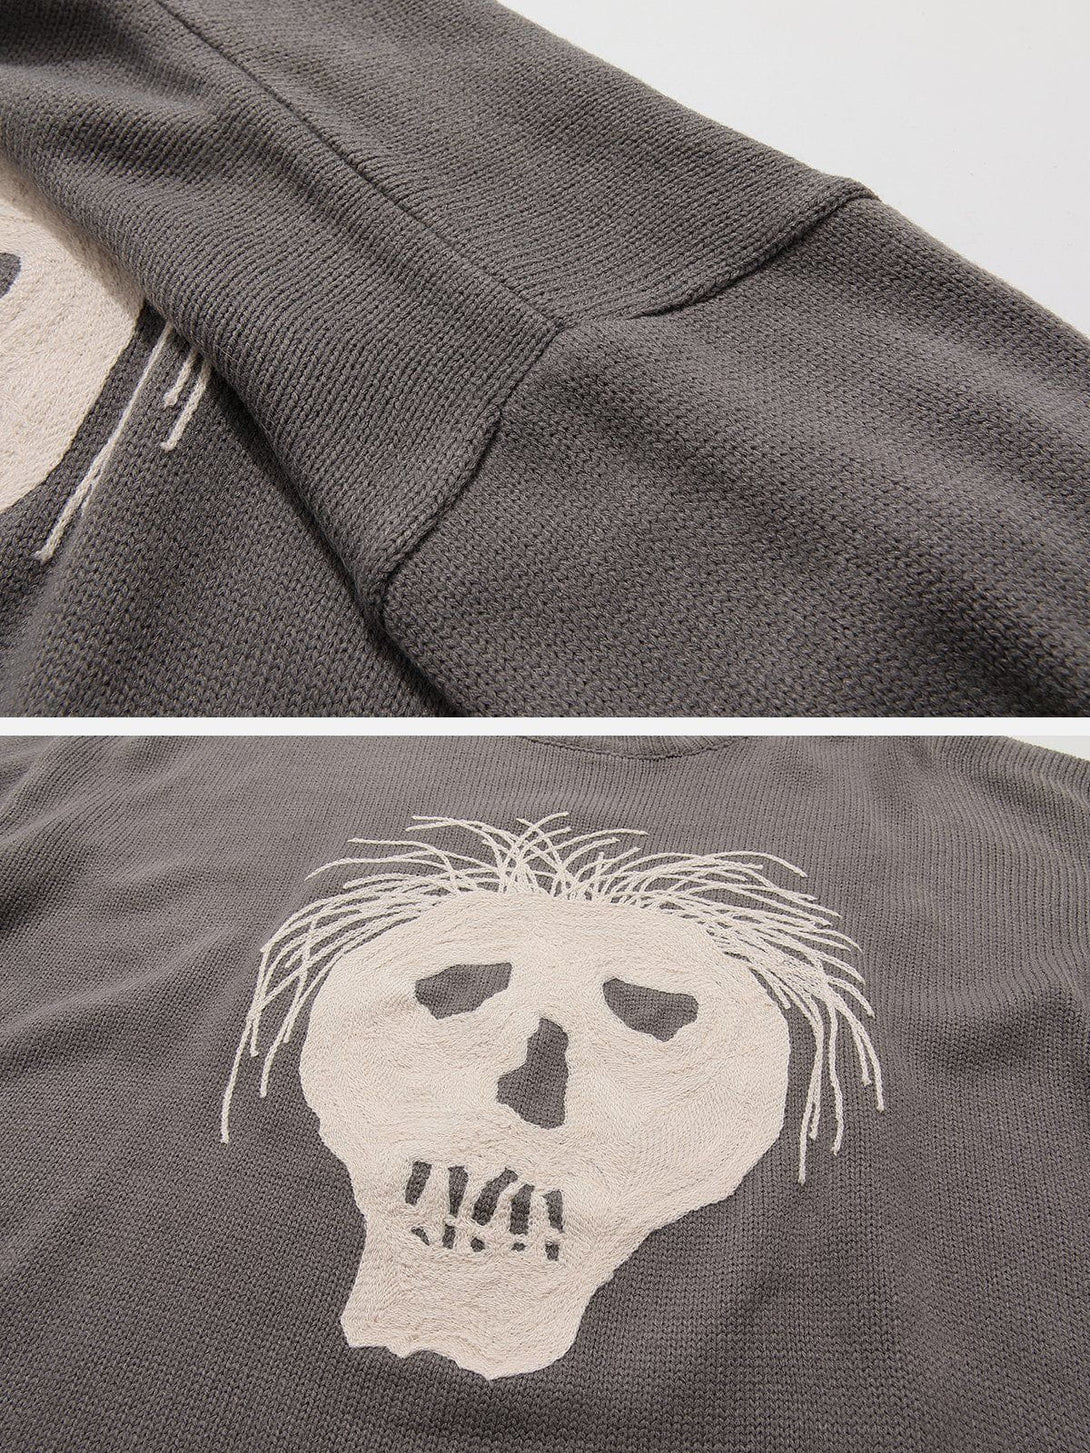 Majesda® - Skull Sticker Sweater outfit ideas streetwear fashion